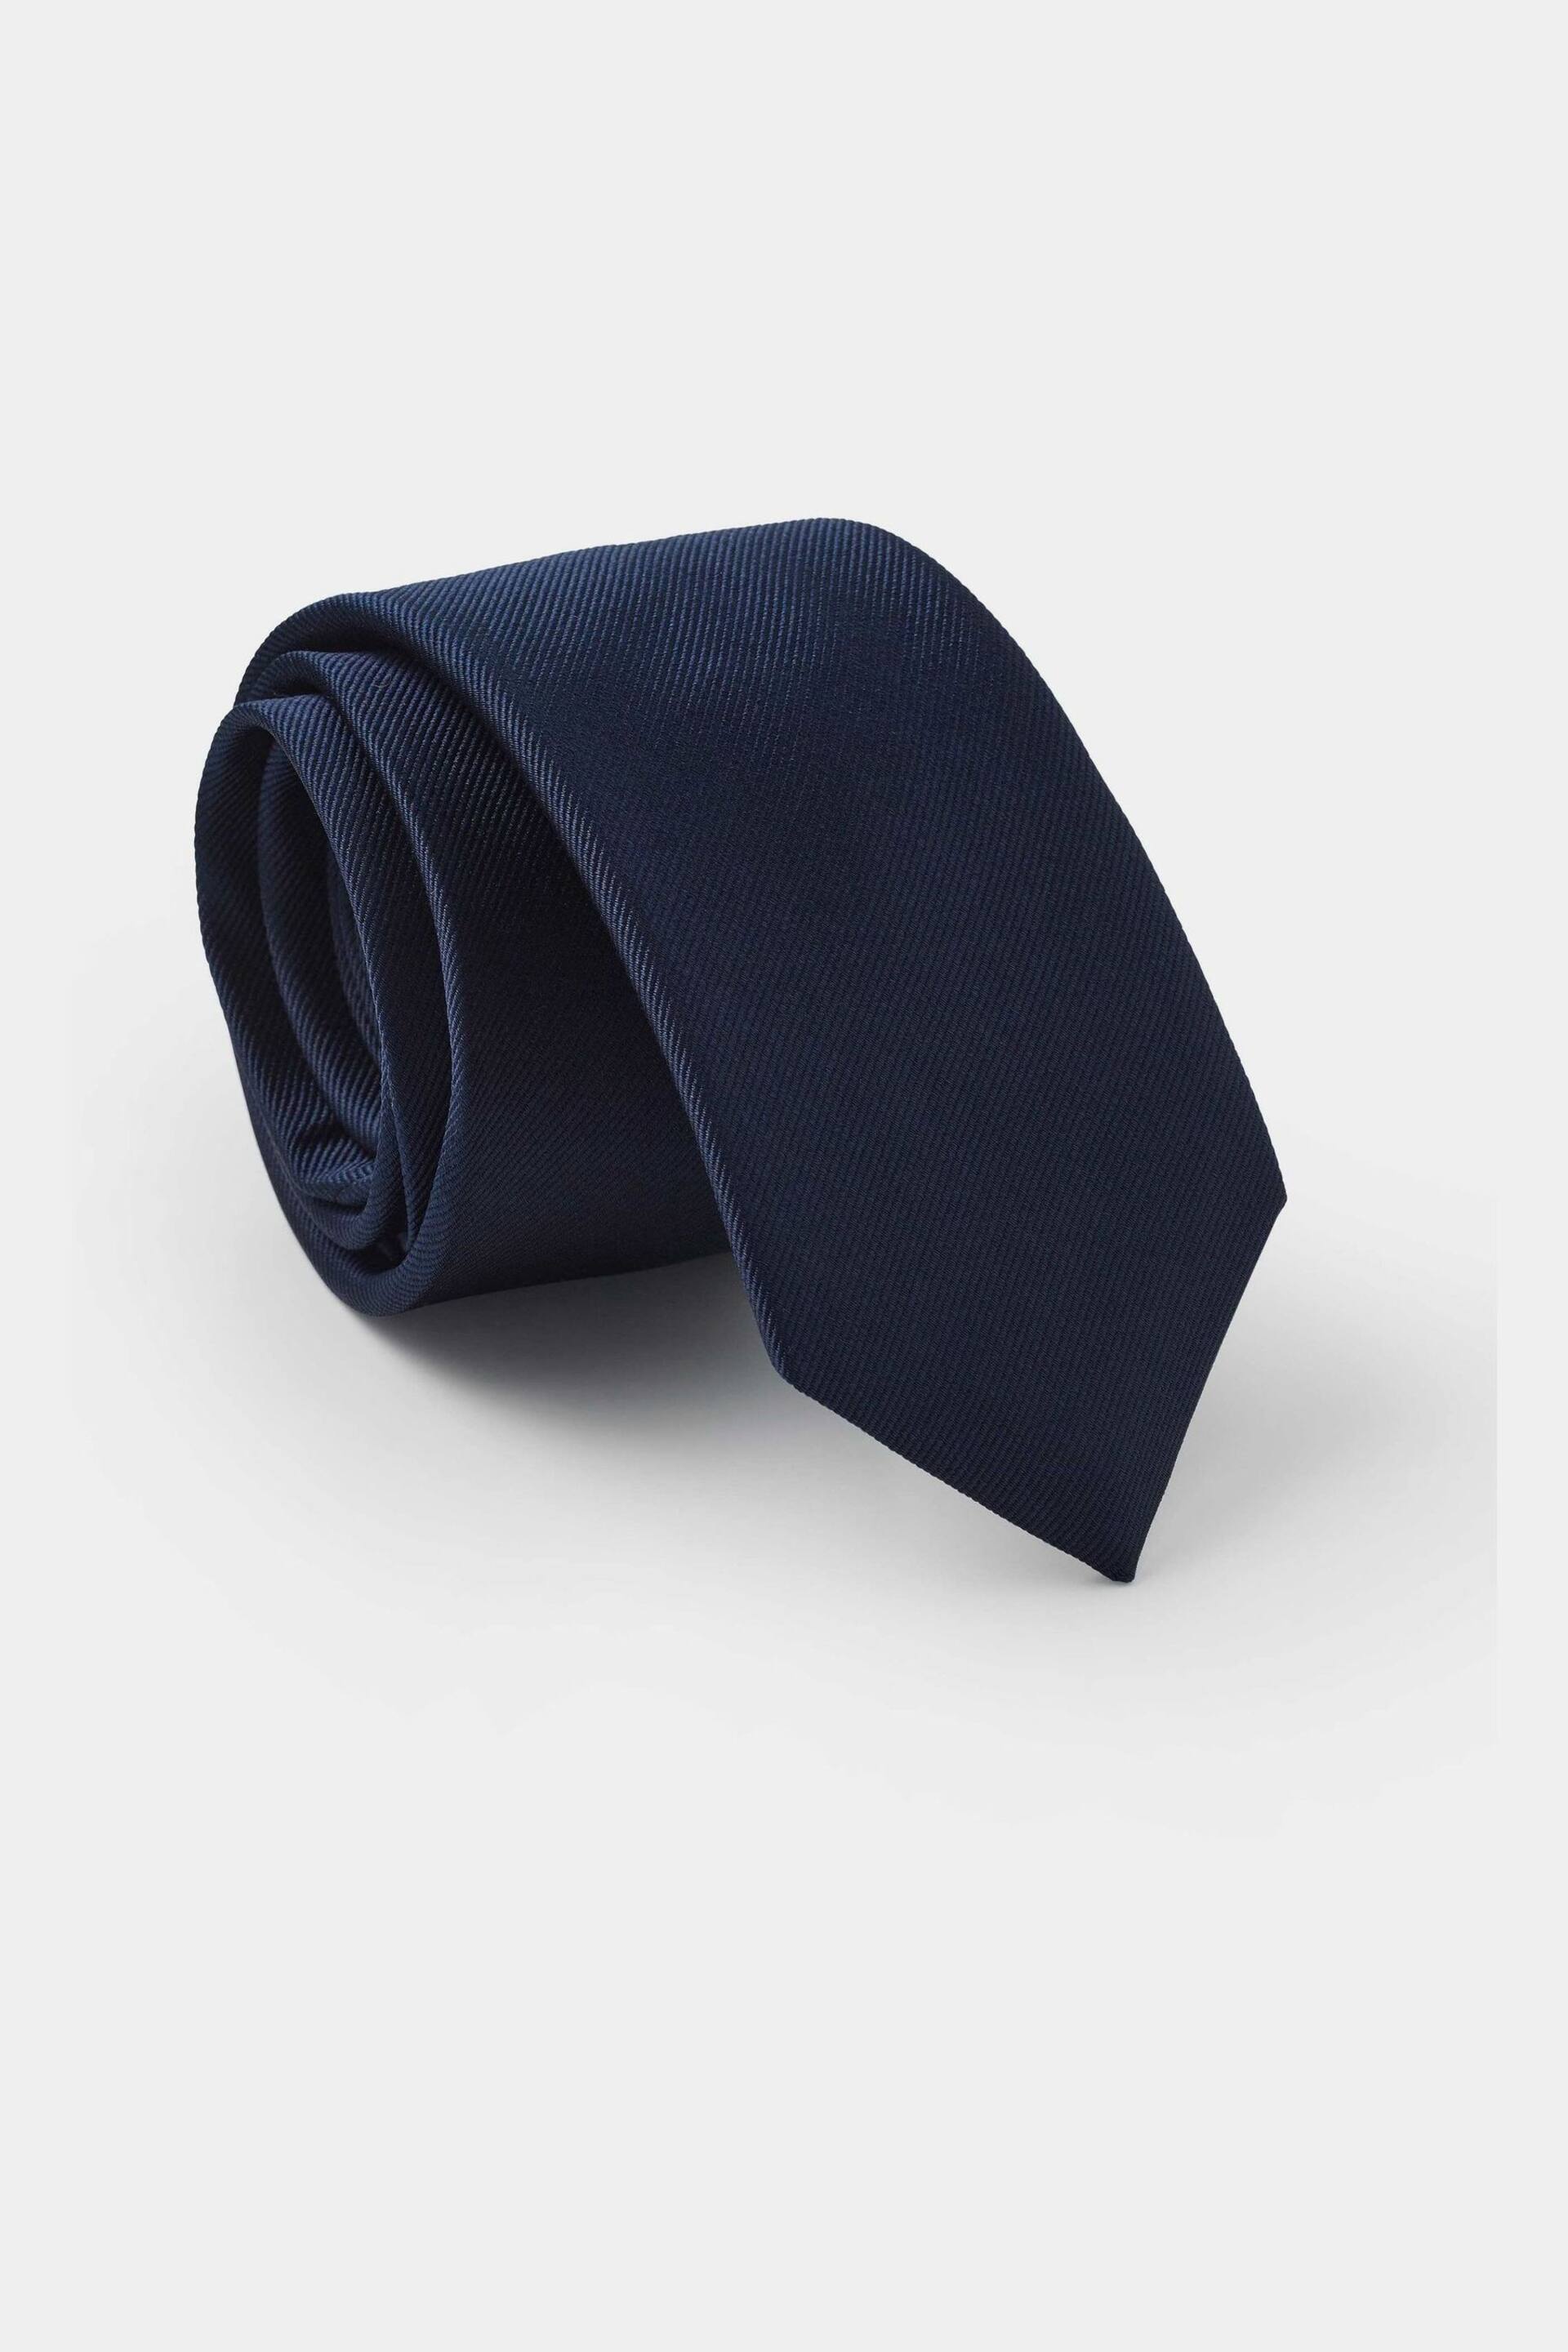 Savile Row Company Navy Fine Twill Skinny Silk Tie - Image 1 of 4